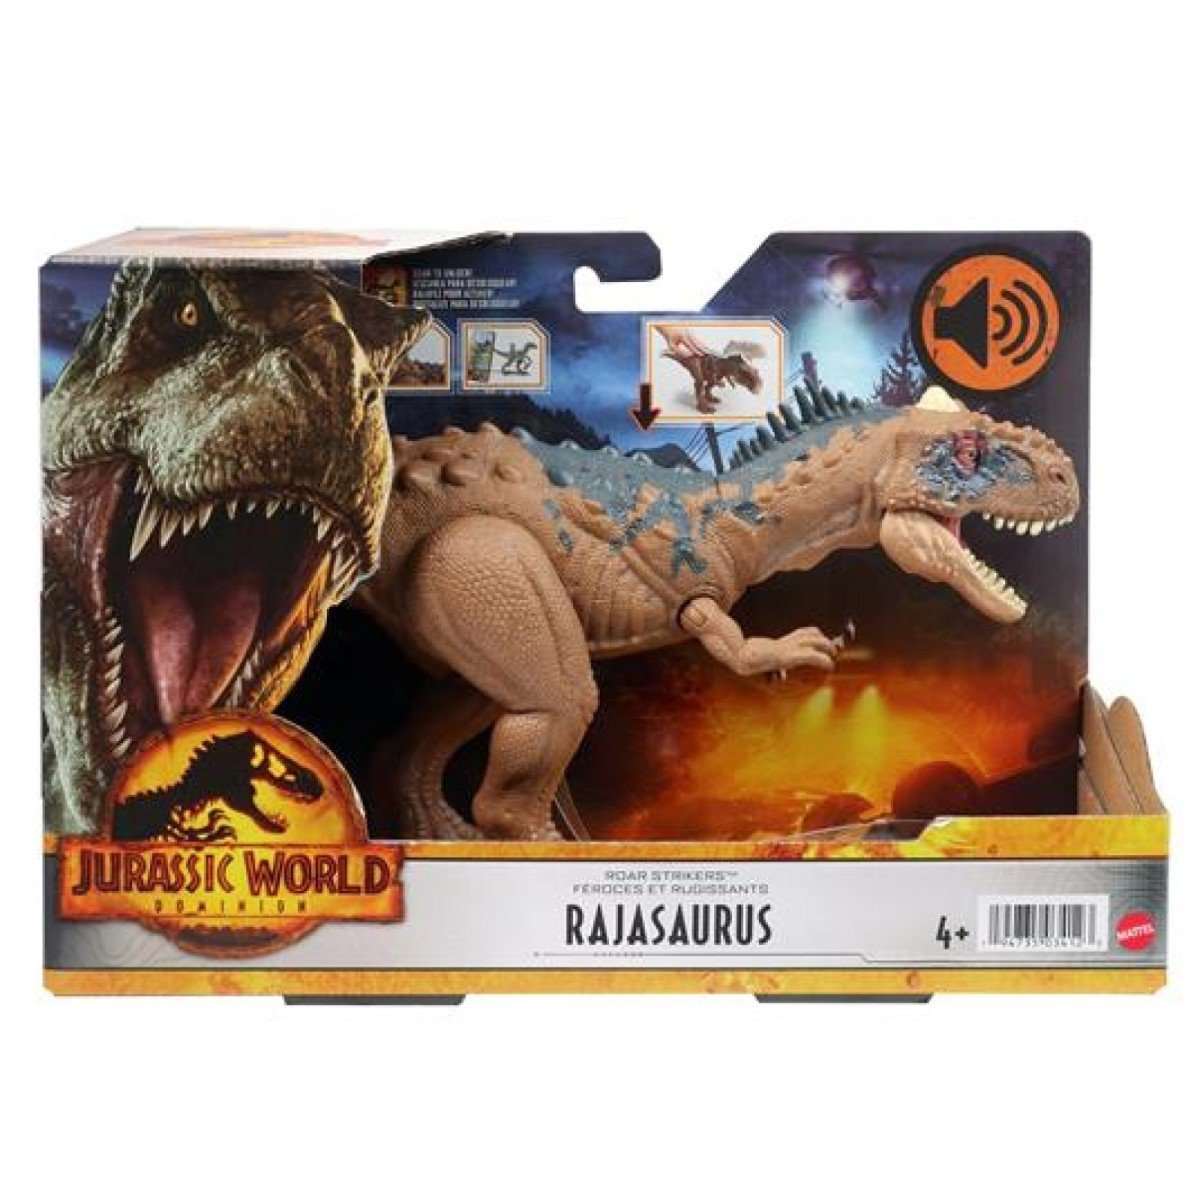 Jurassic World Dinozor Figürü Rajasaurus HDX35